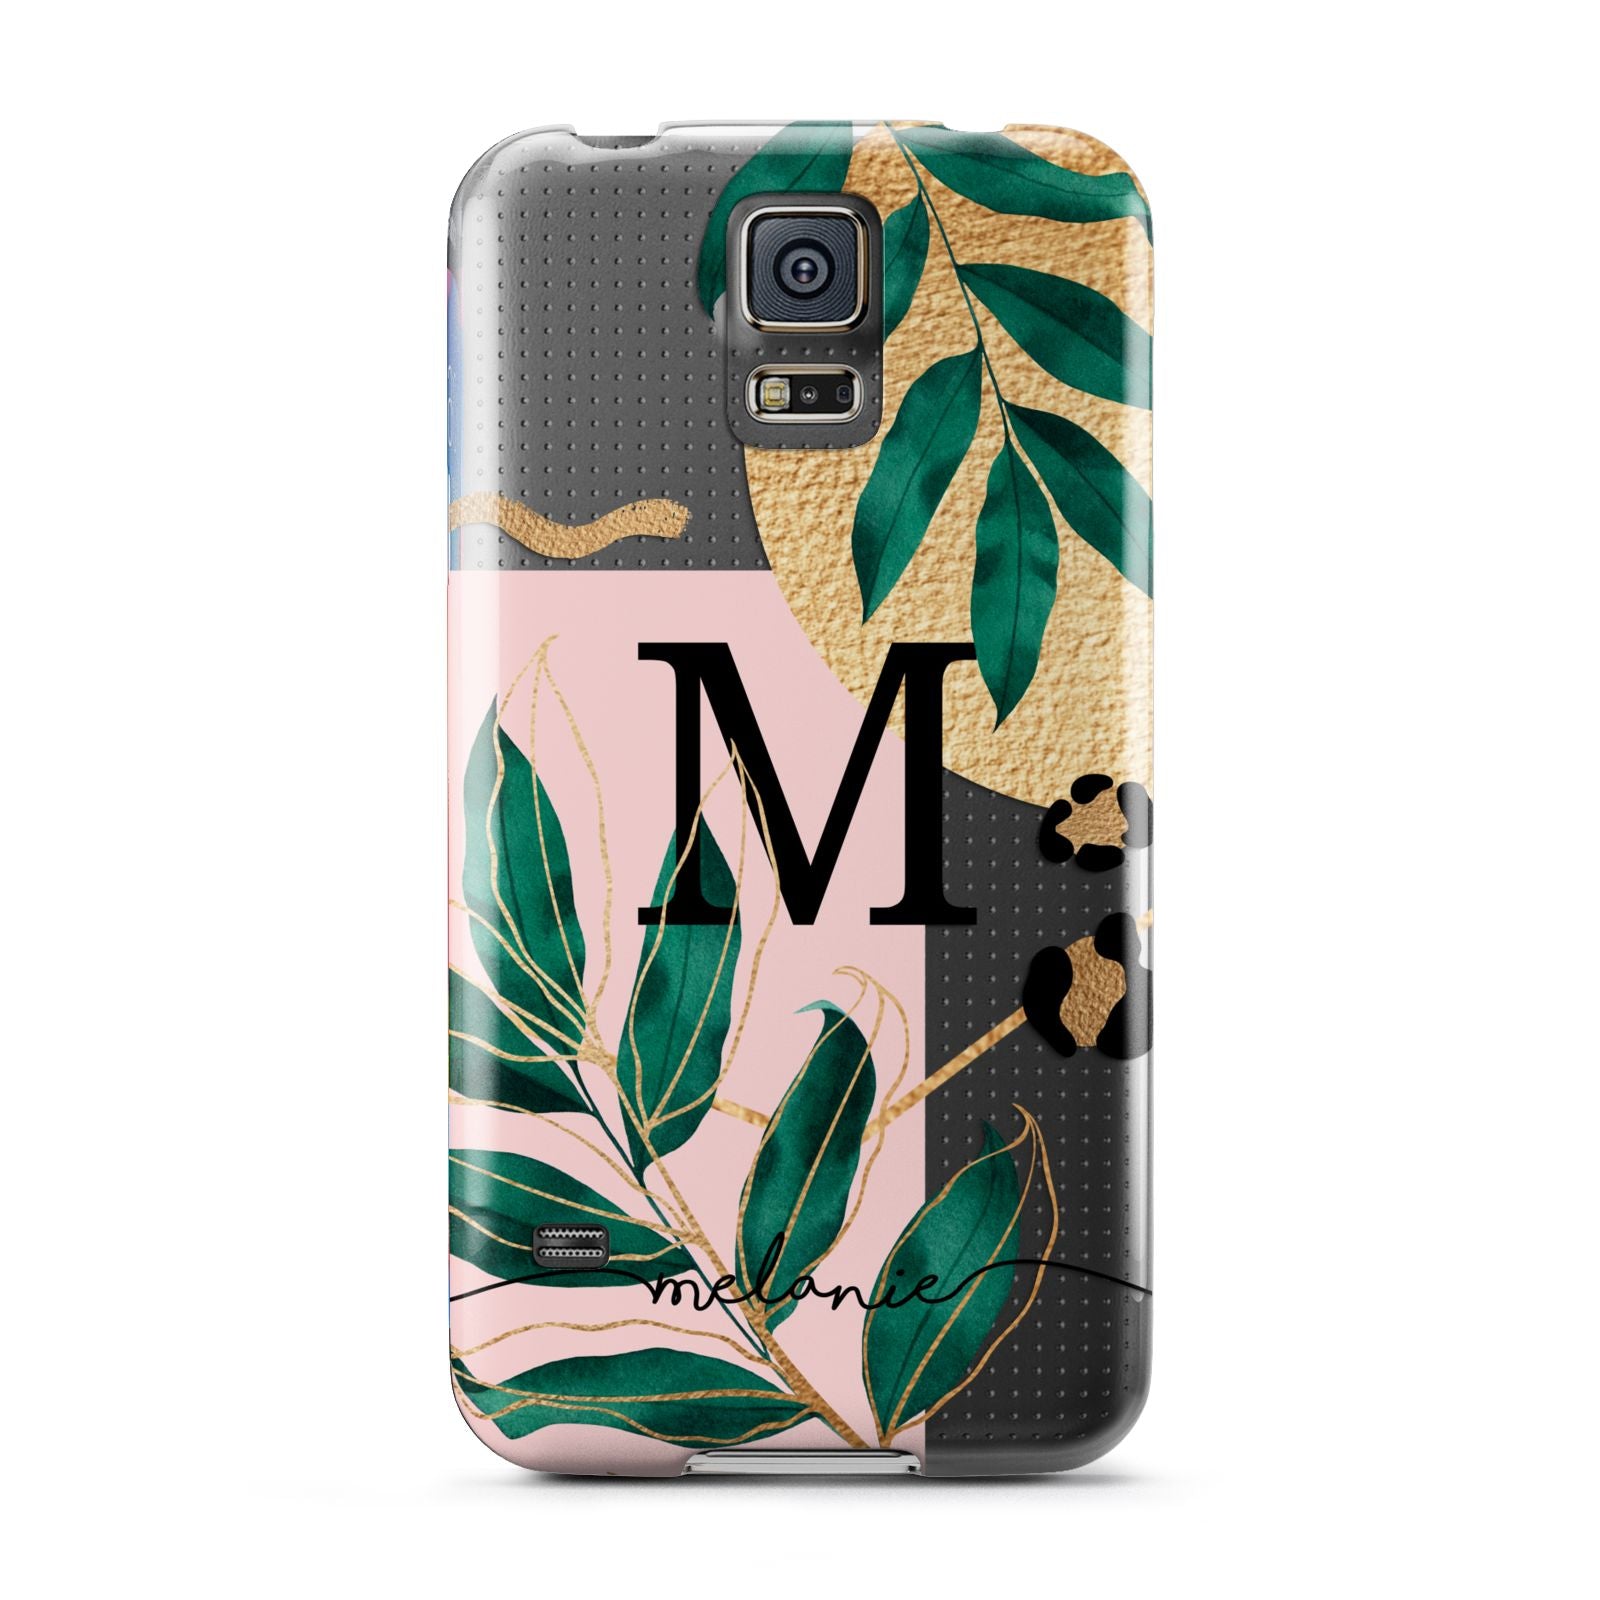 Personalised Monogram Tropical Samsung Galaxy S5 Case